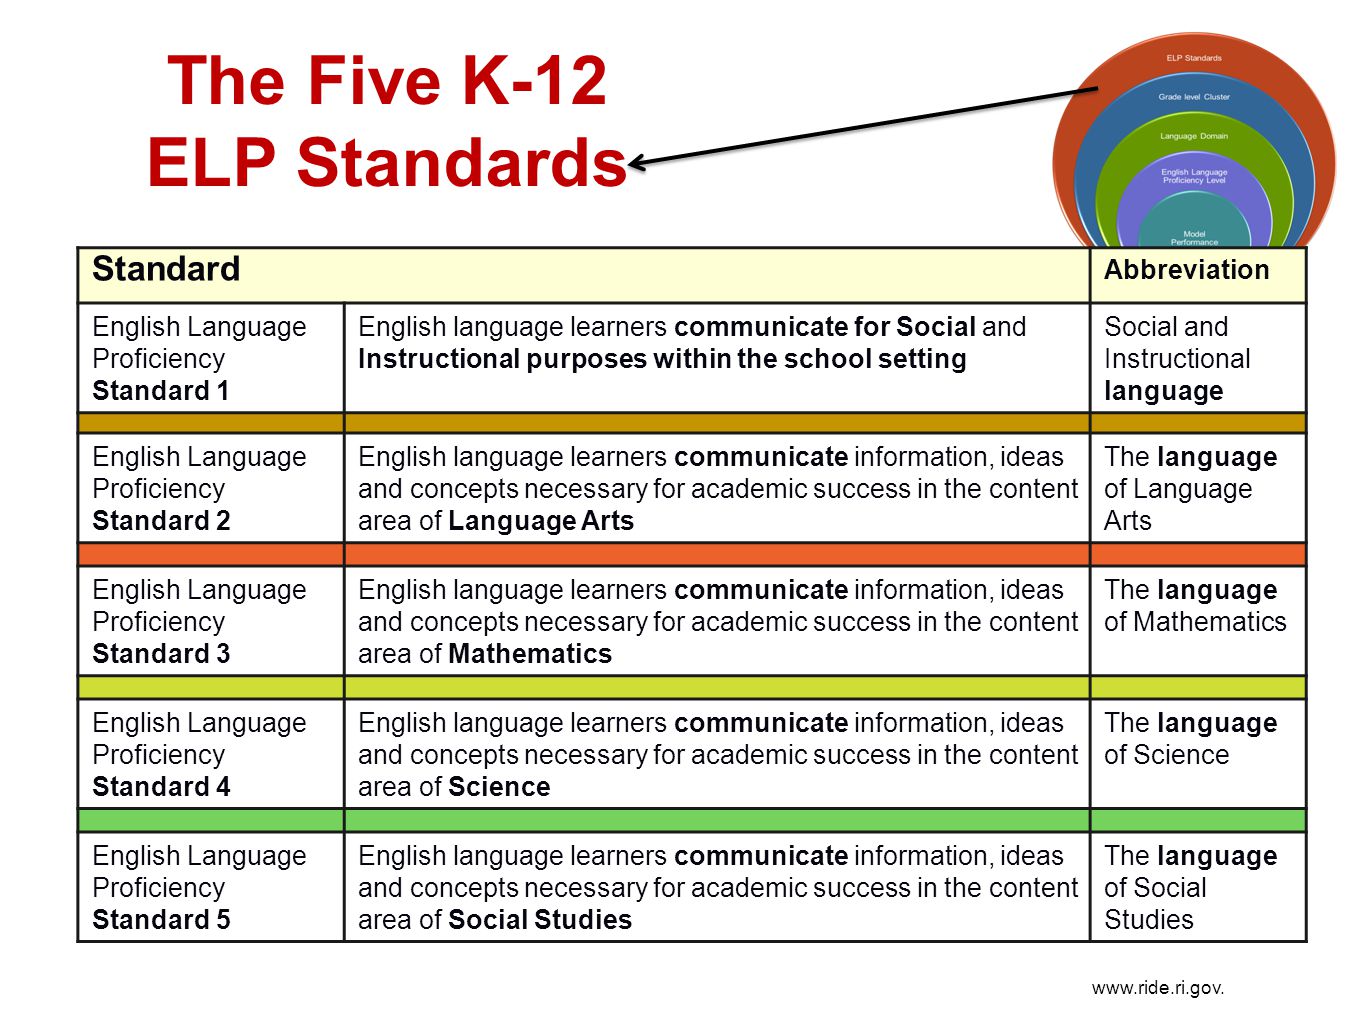 The Five K-12 ELP Standards